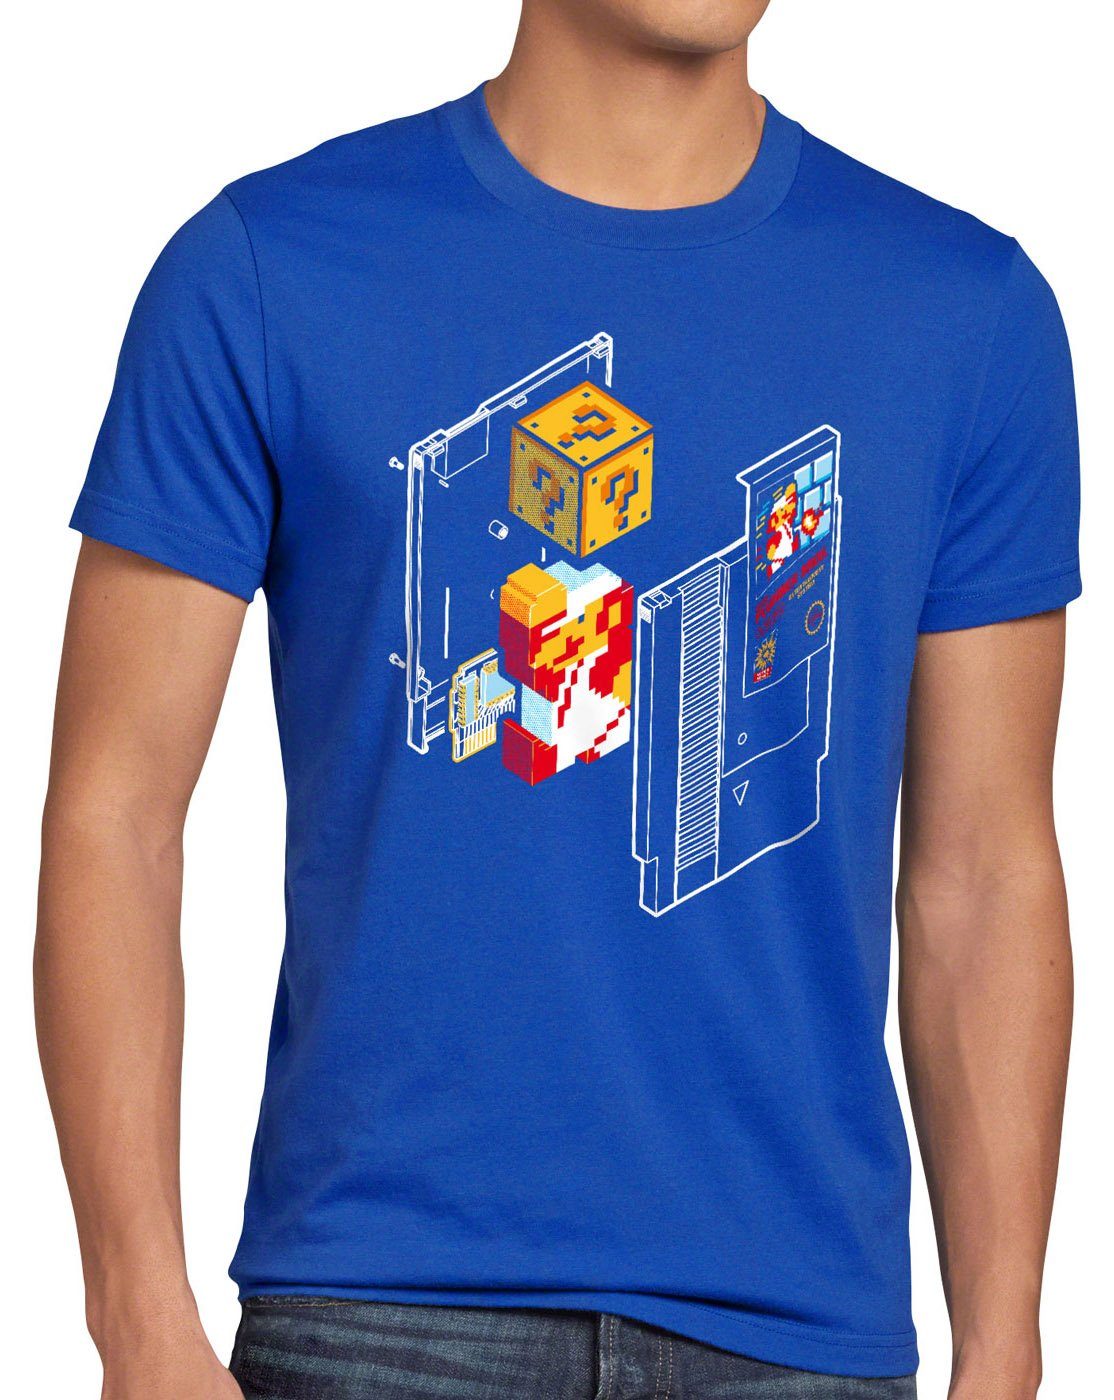 style3 Print-Shirt Herren T-Shirt Plumber Bros nes snes classic mini 8-Bit gamer retro classic blau